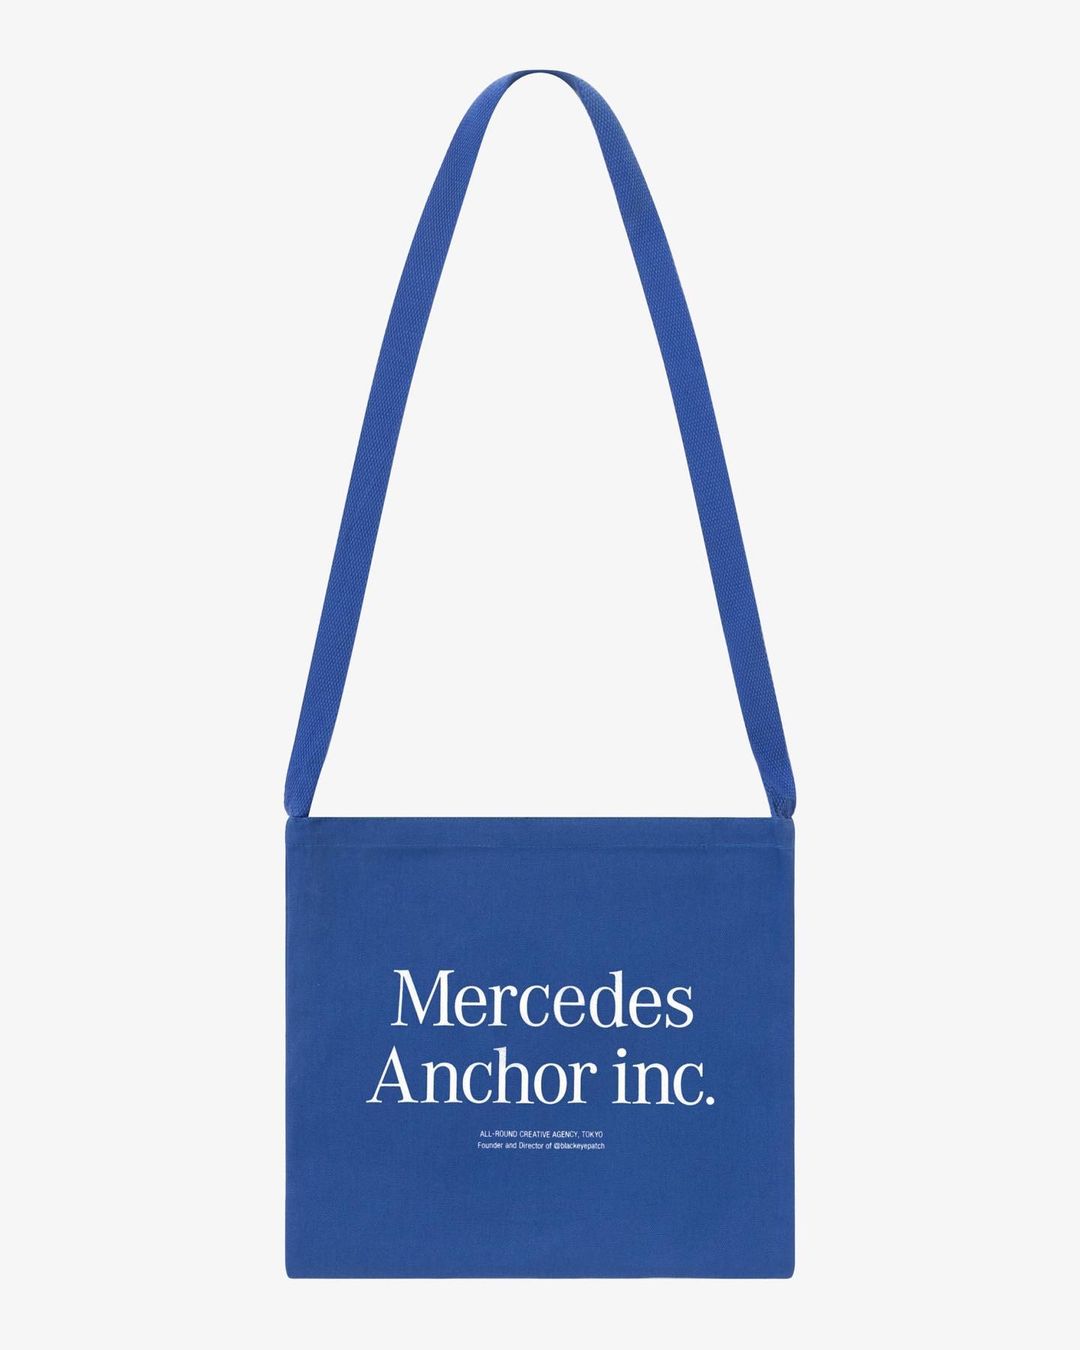 Mercedes anchor inc. lanyard